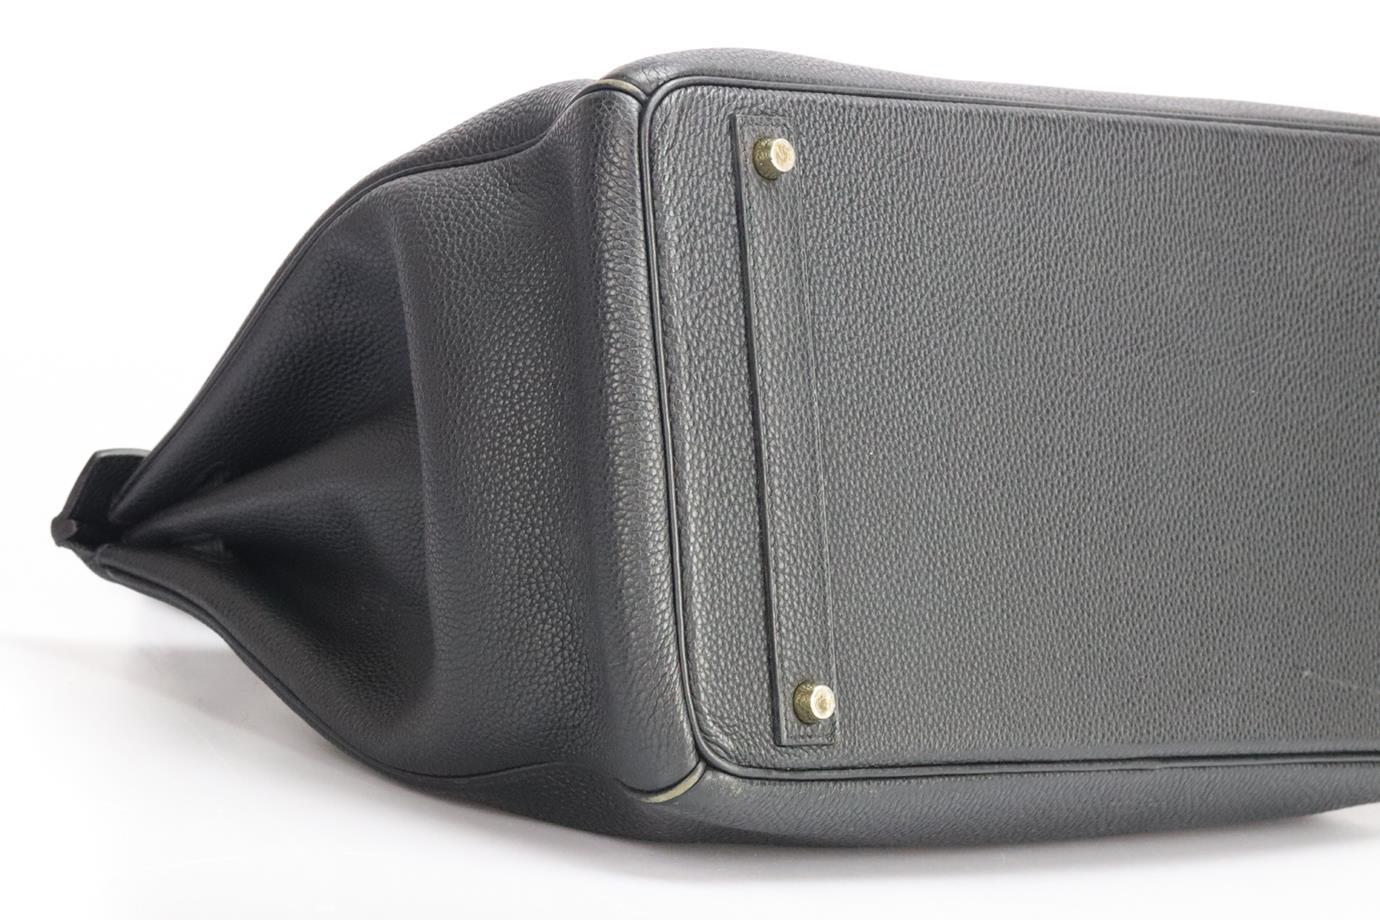 Hermès 2010 Birkin 40 Cm Clemence Leather Bag 3